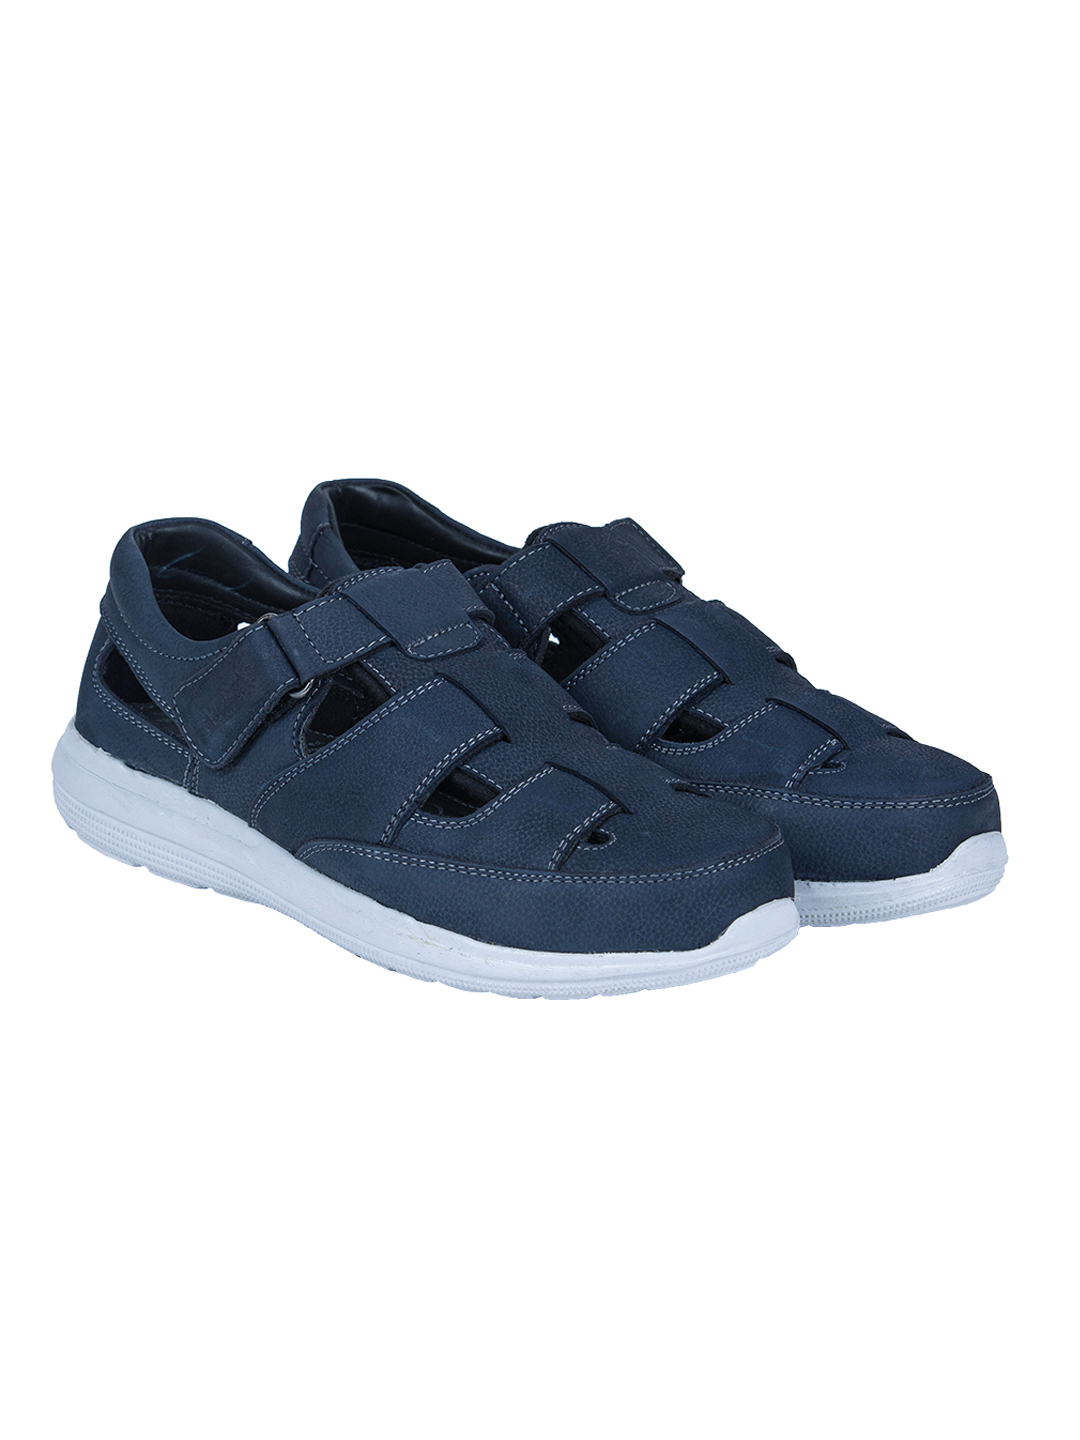 Buy Von Wellx Germany Comfort Blue James Sandals Online in Kandy